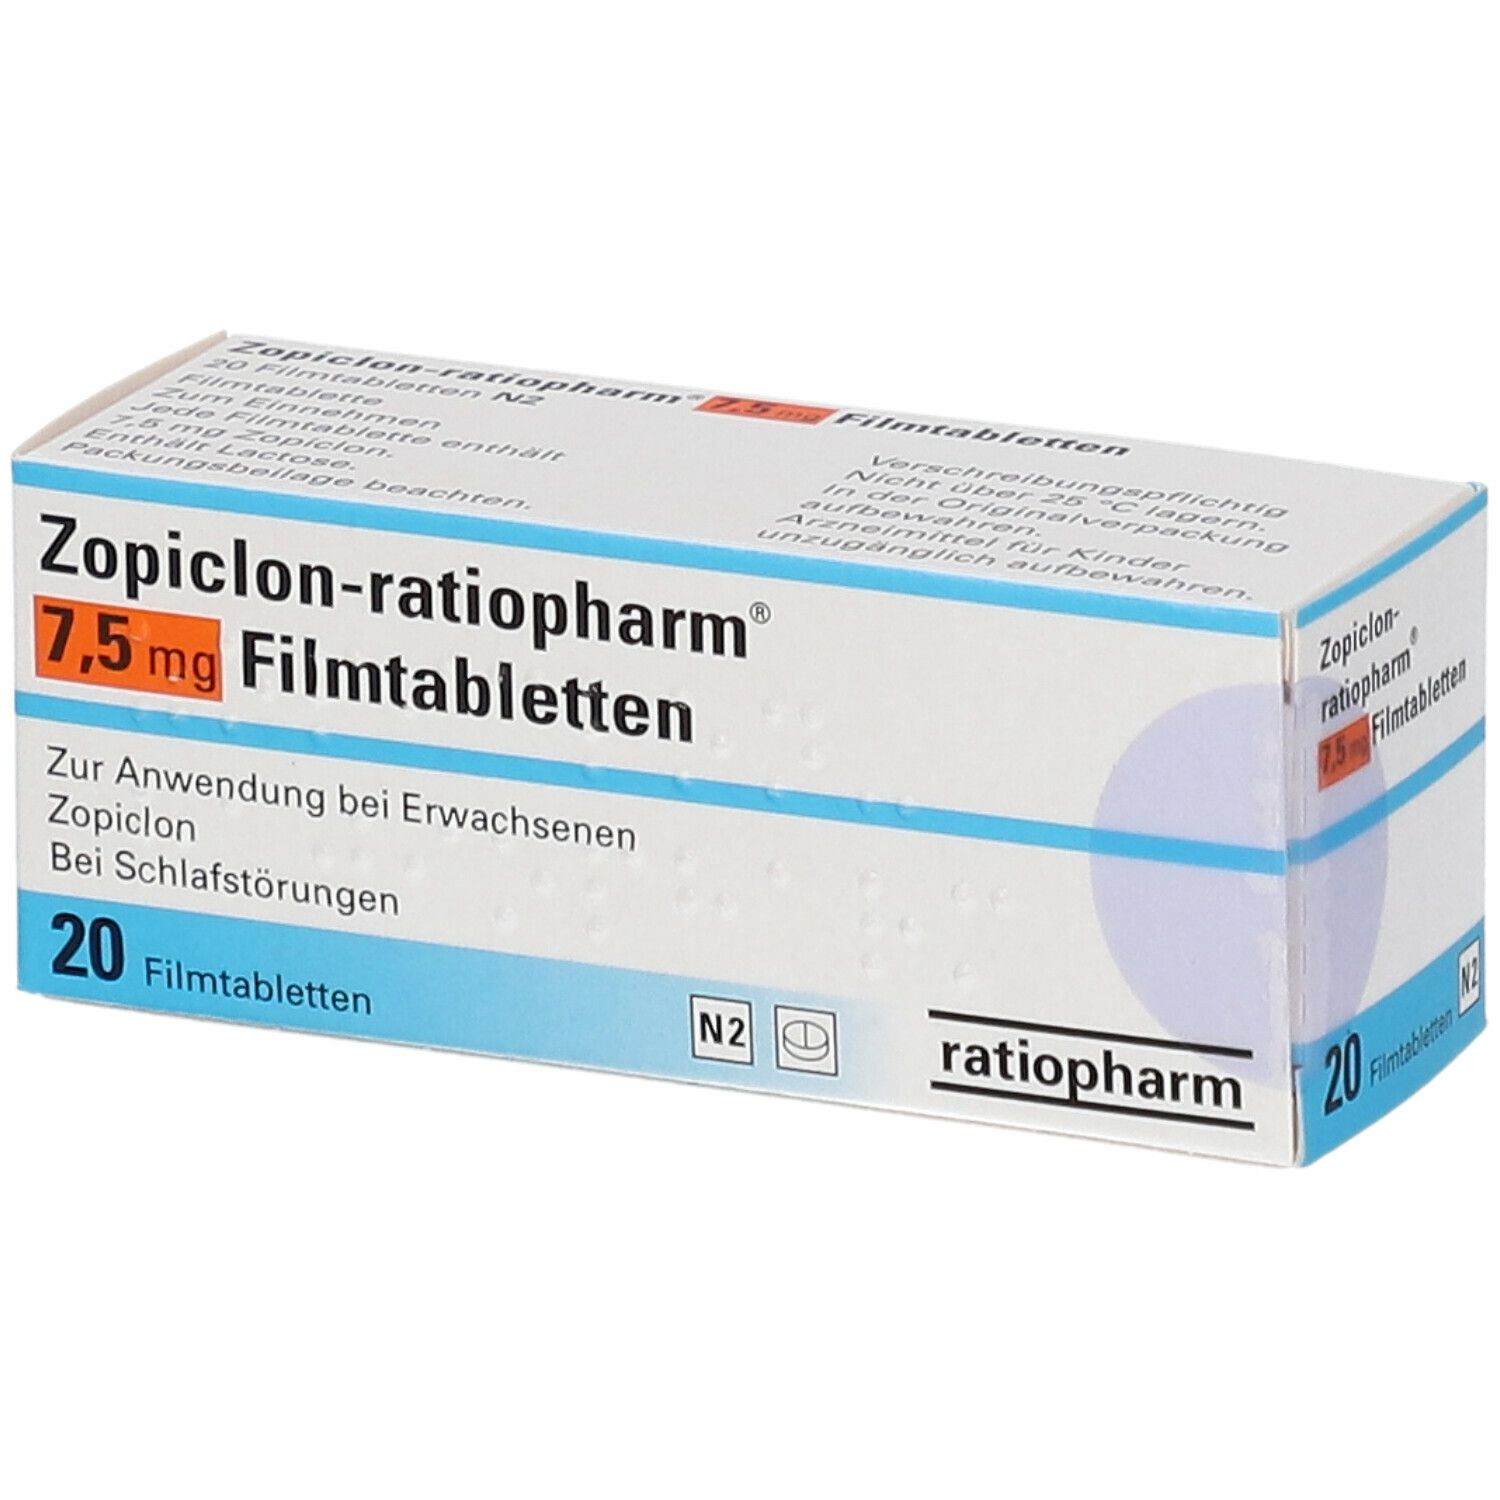 Zopiclon-ratiopharm® 7,5 mg